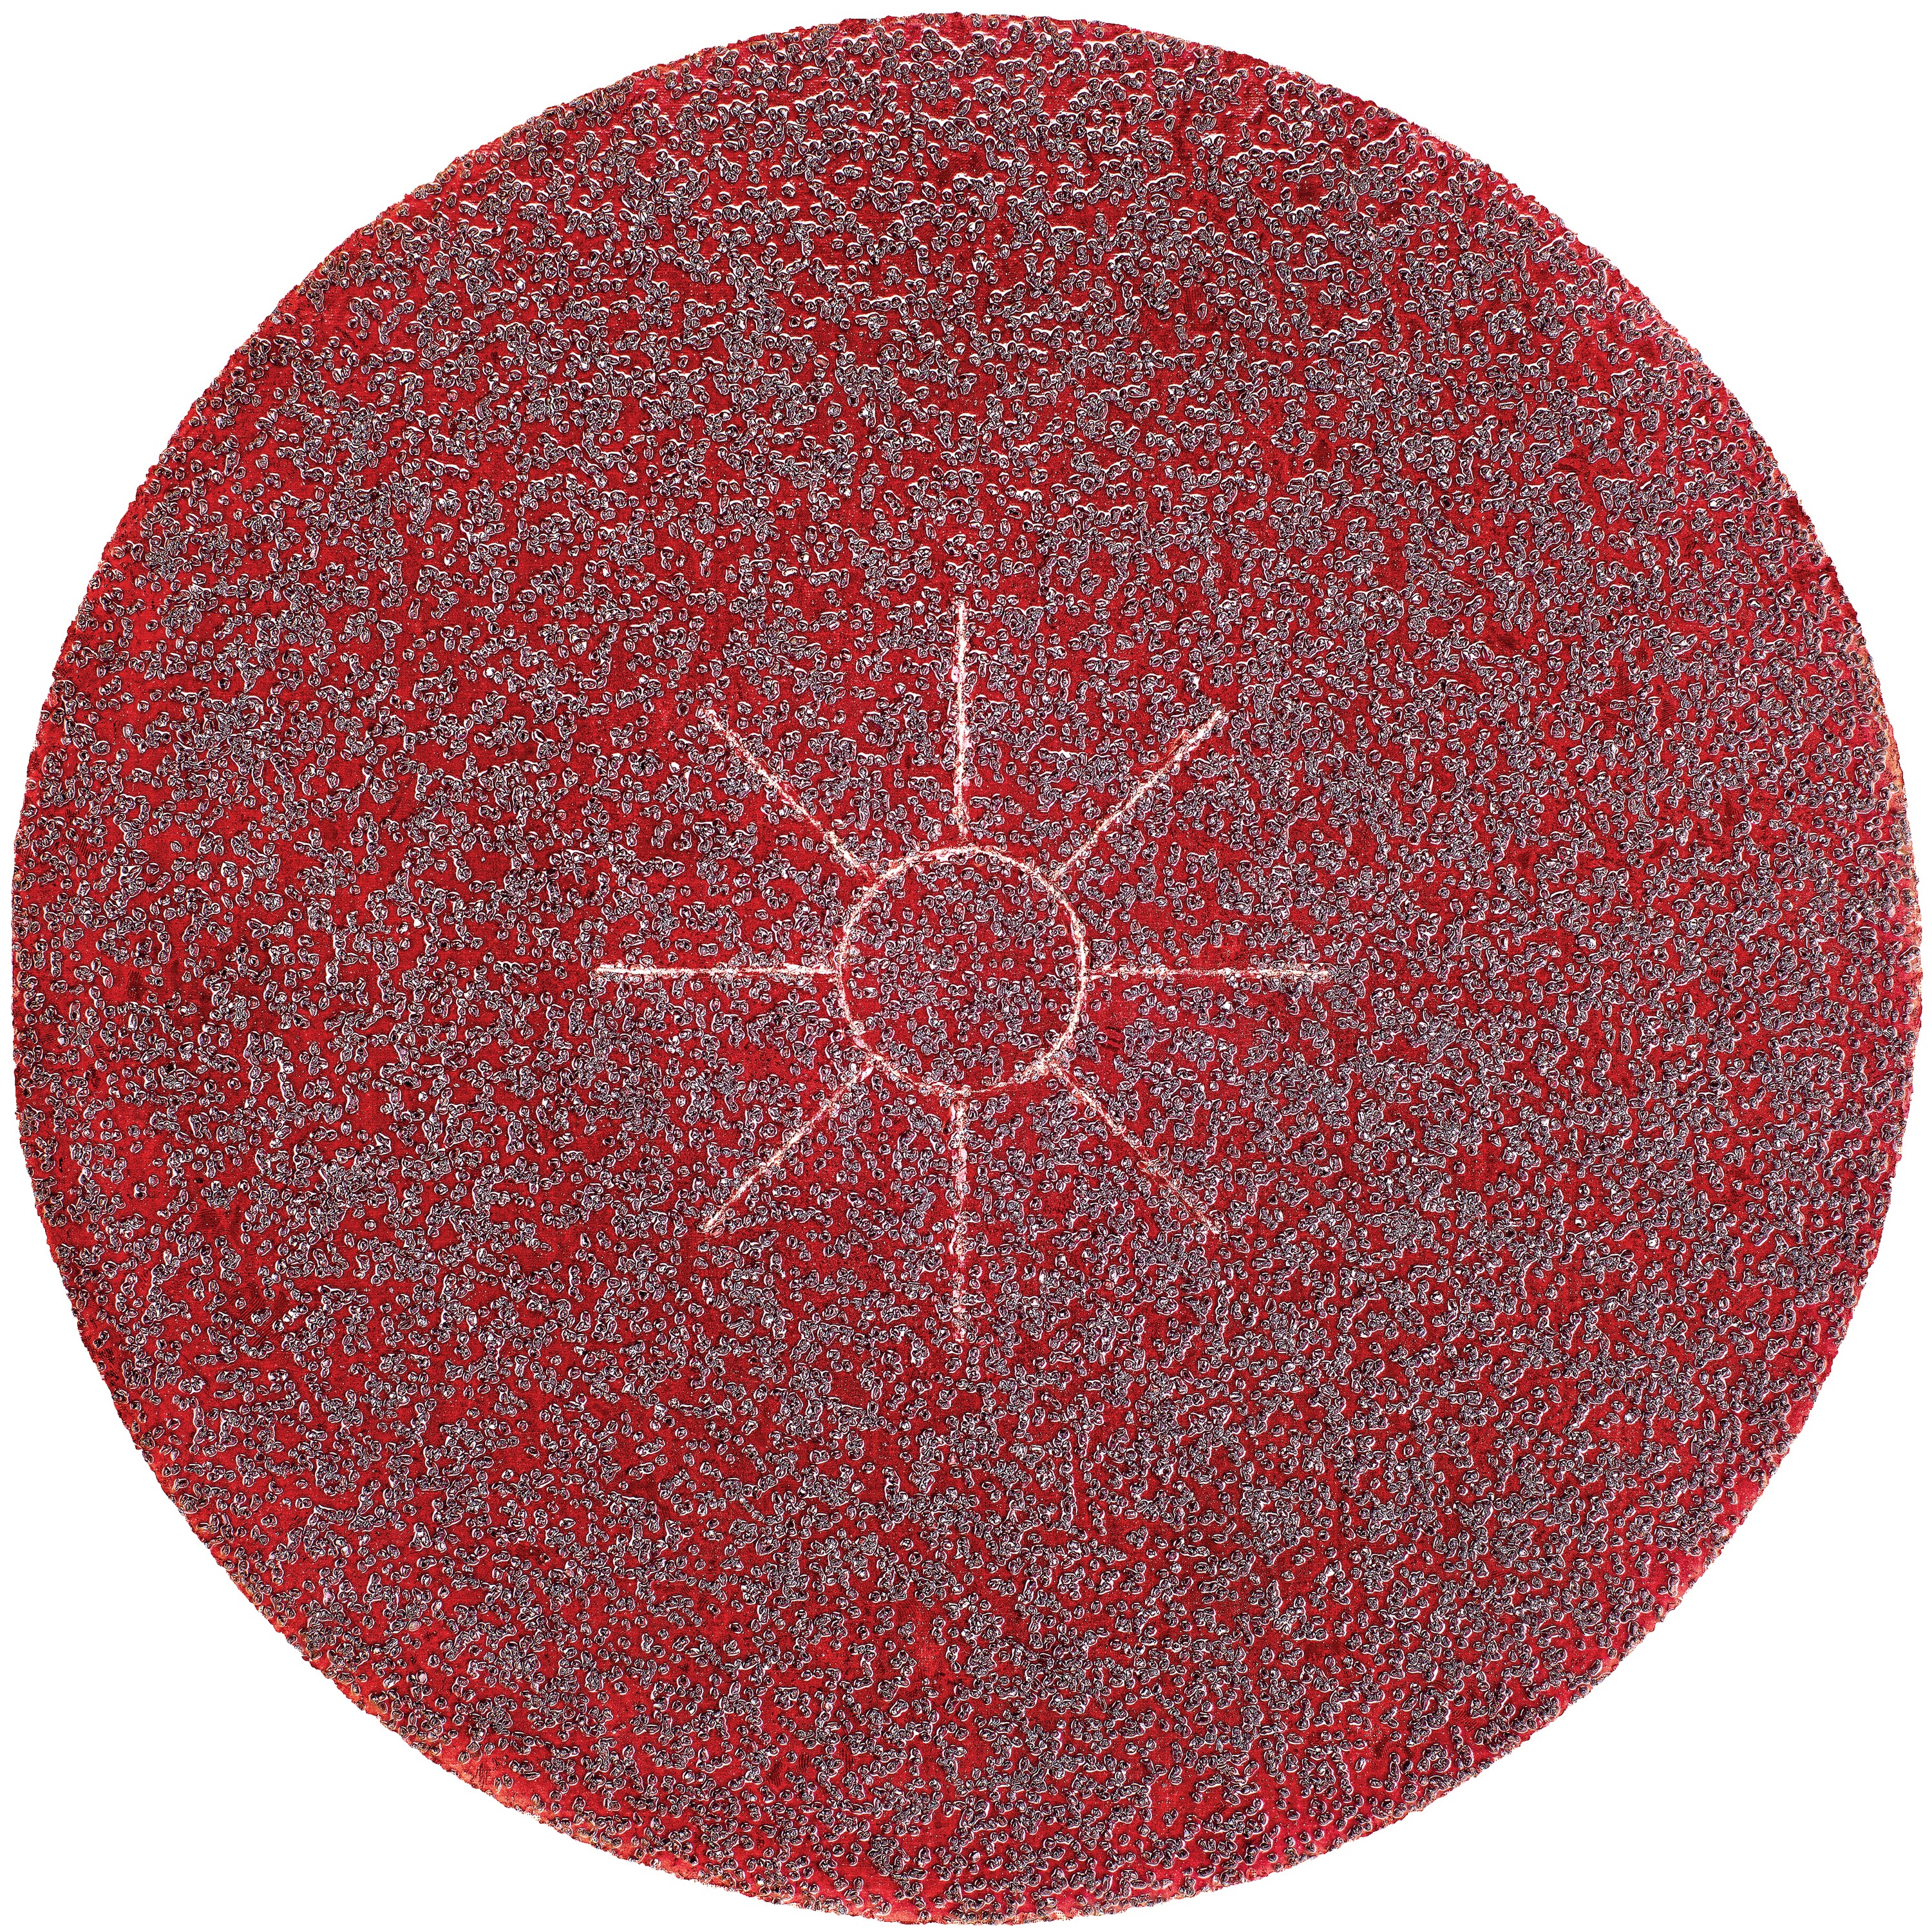 Profile of H P floor sanding disc.